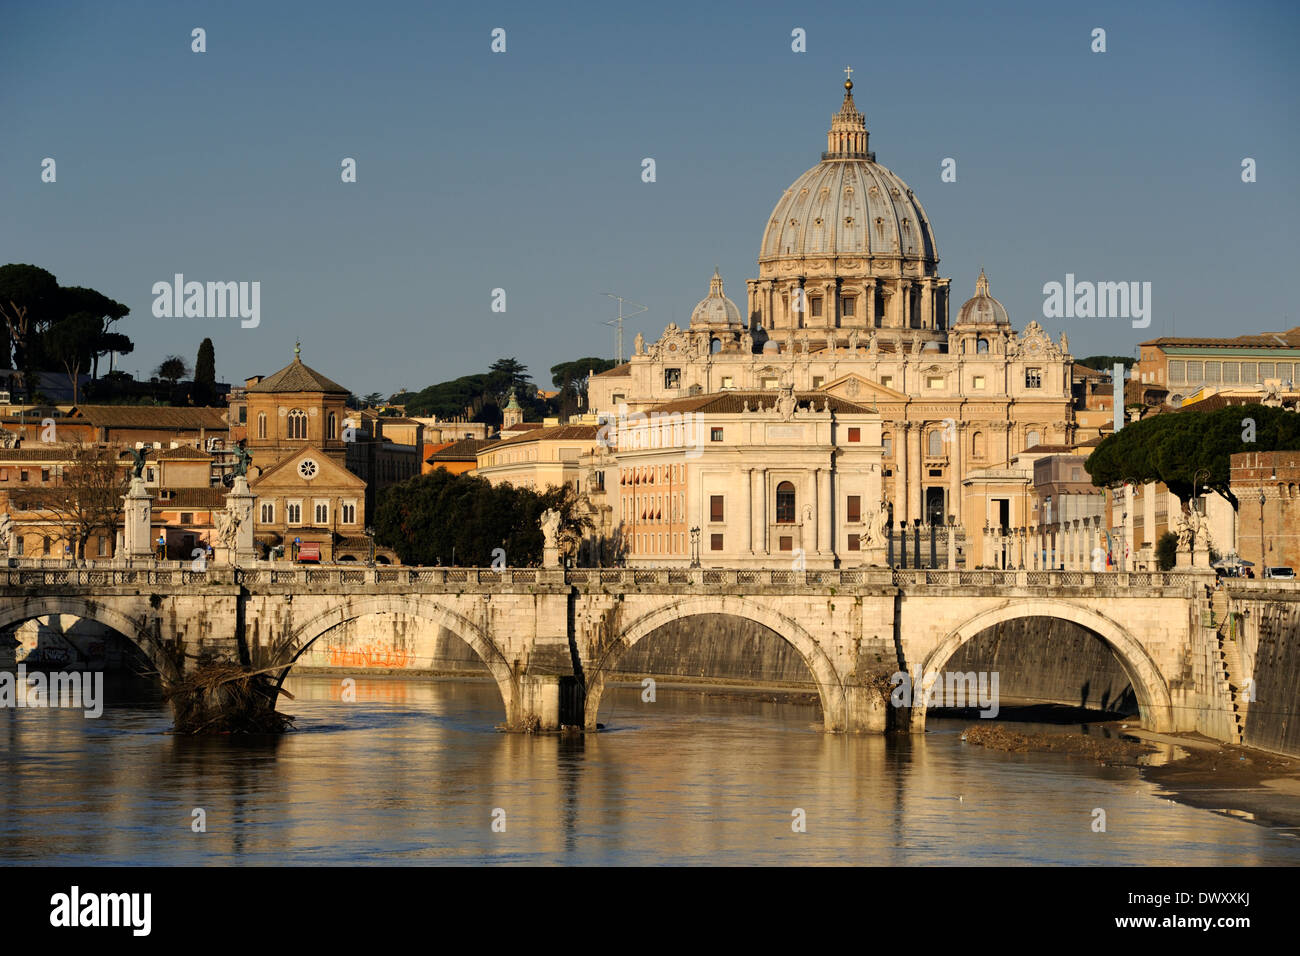 Italy, Rome, Tiber river, Sant'Angelo bridge and St Peter's basilica Stock Photo